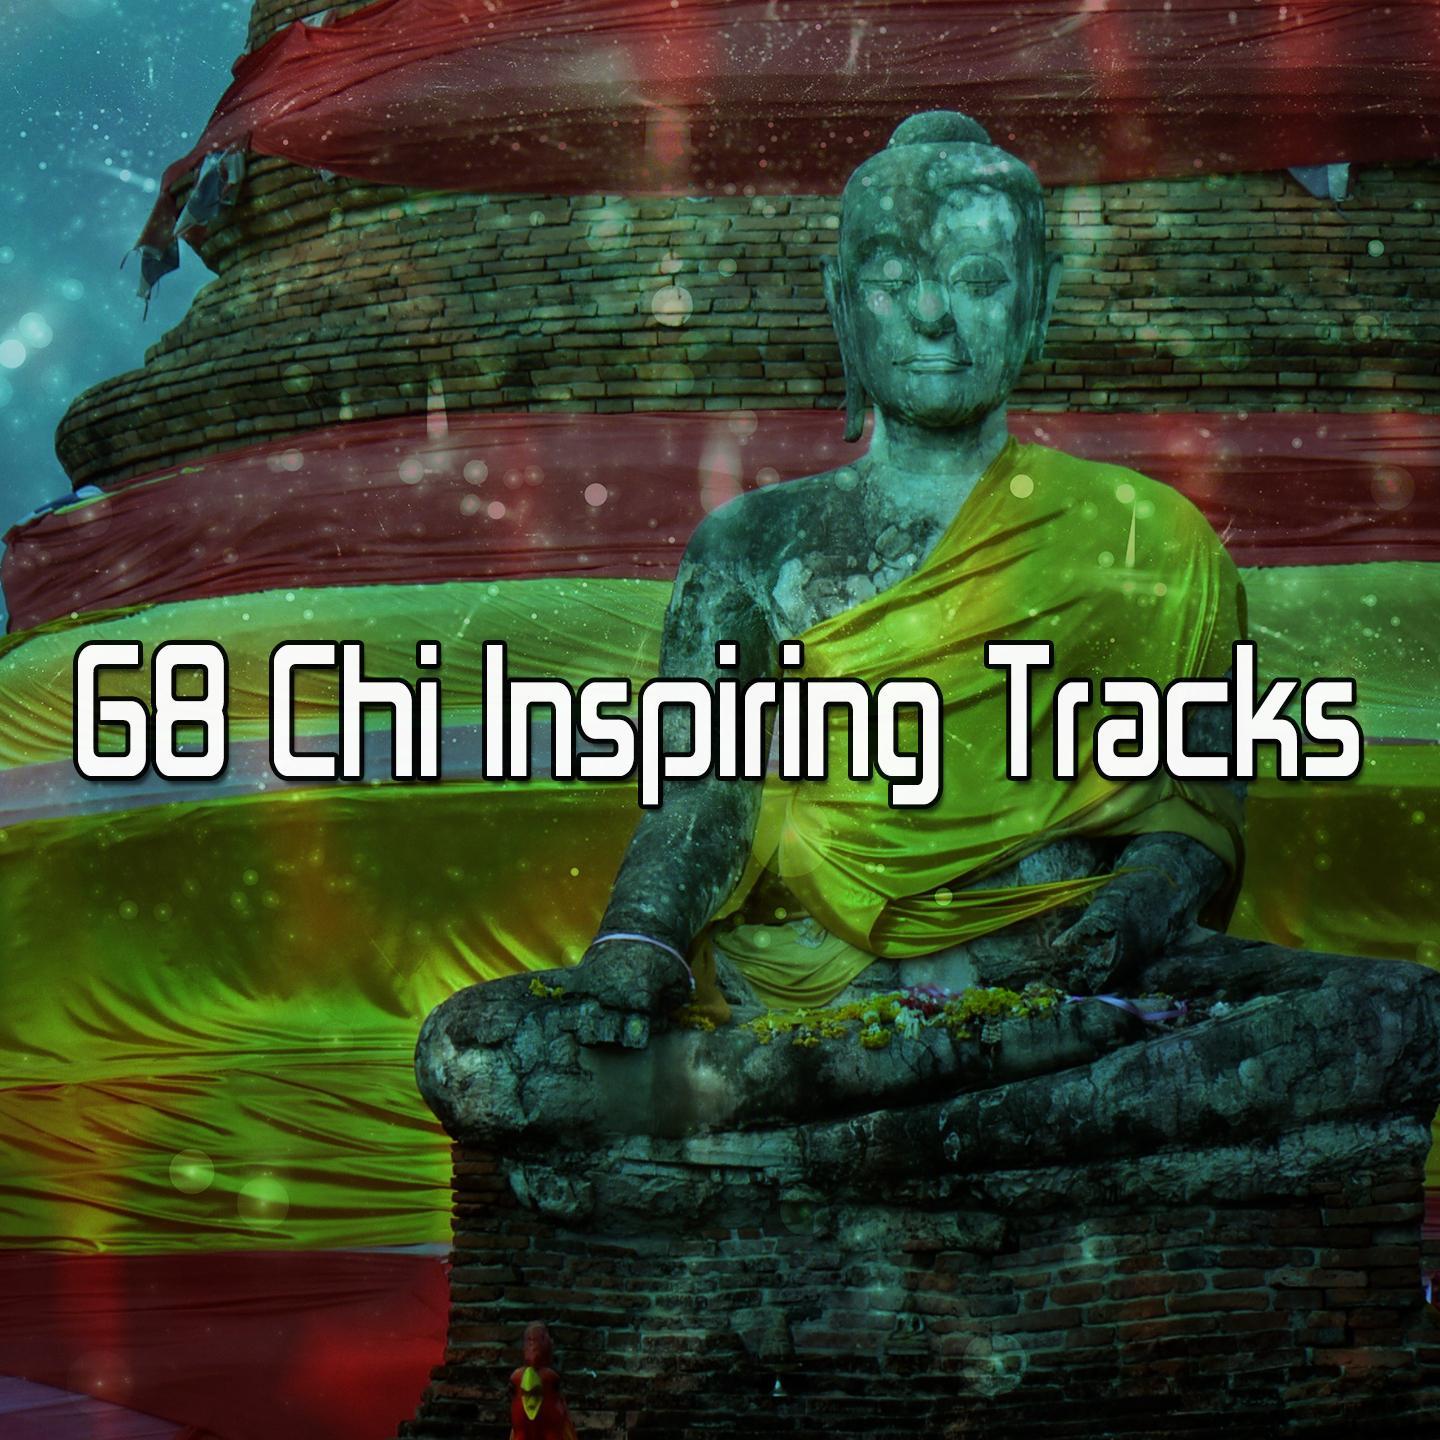 68 Chi Inspiring Tracks